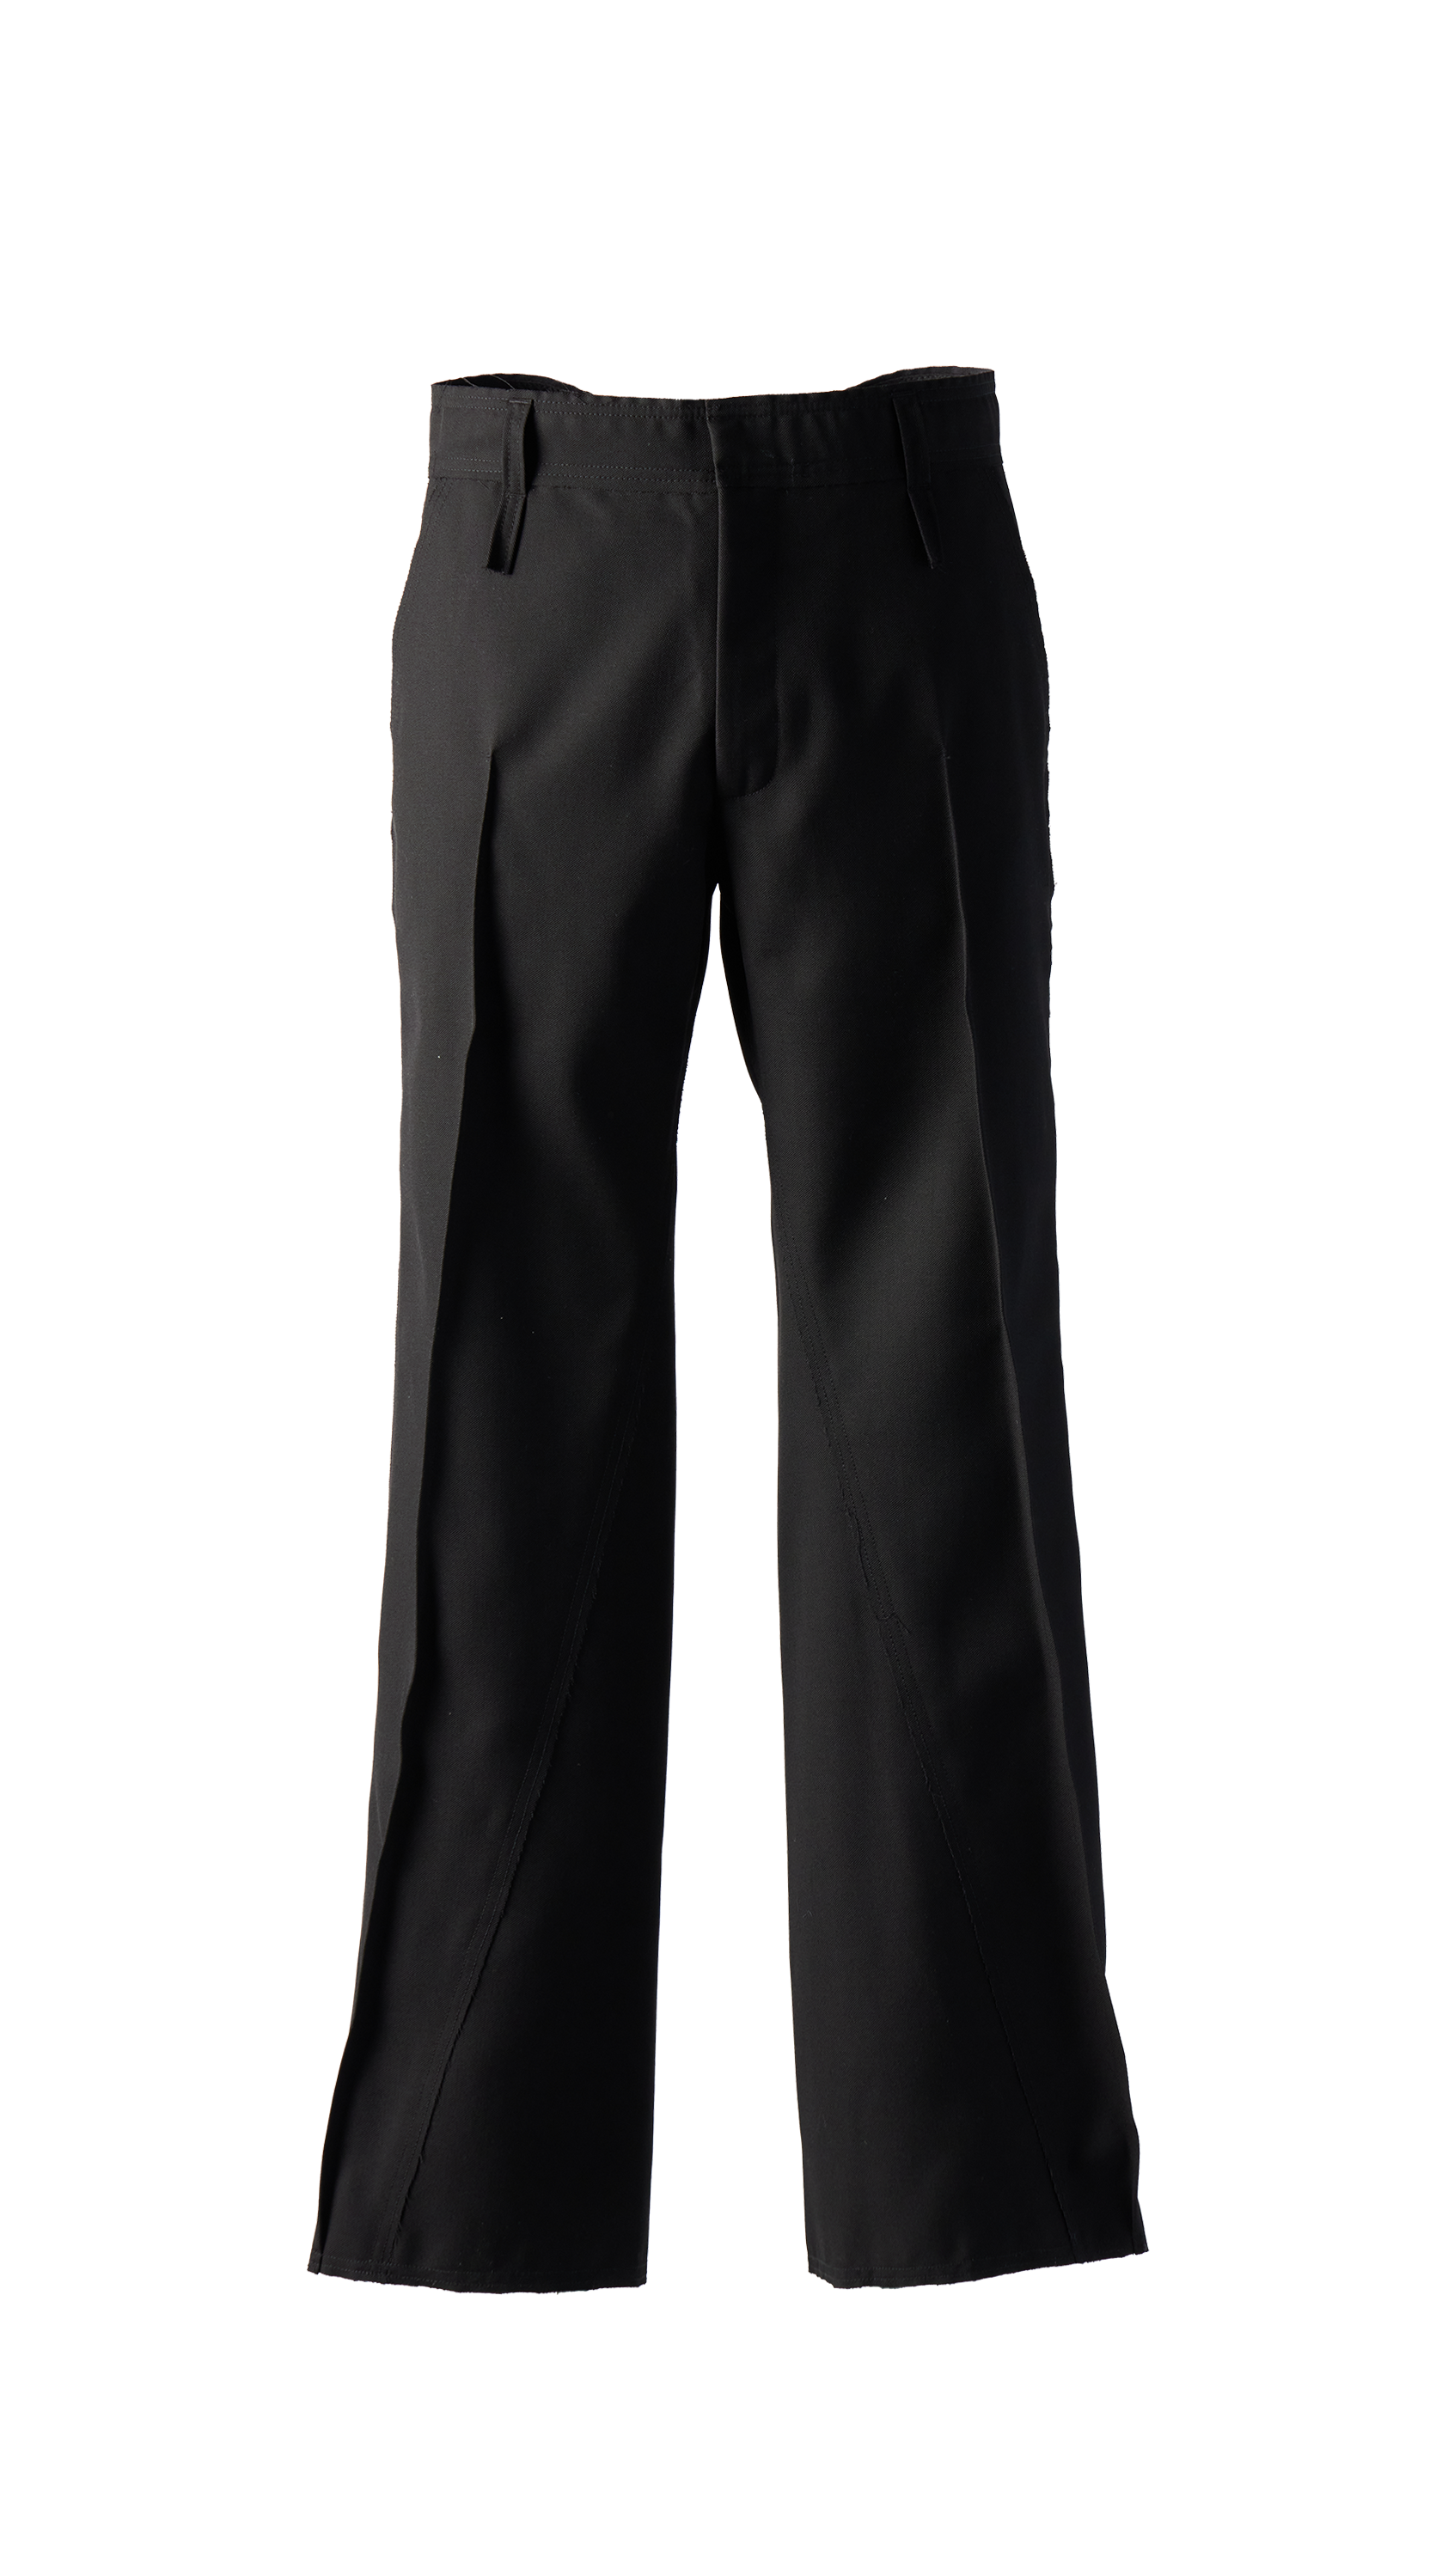 BIANCA SAUNDERS - Pen Trouser product image